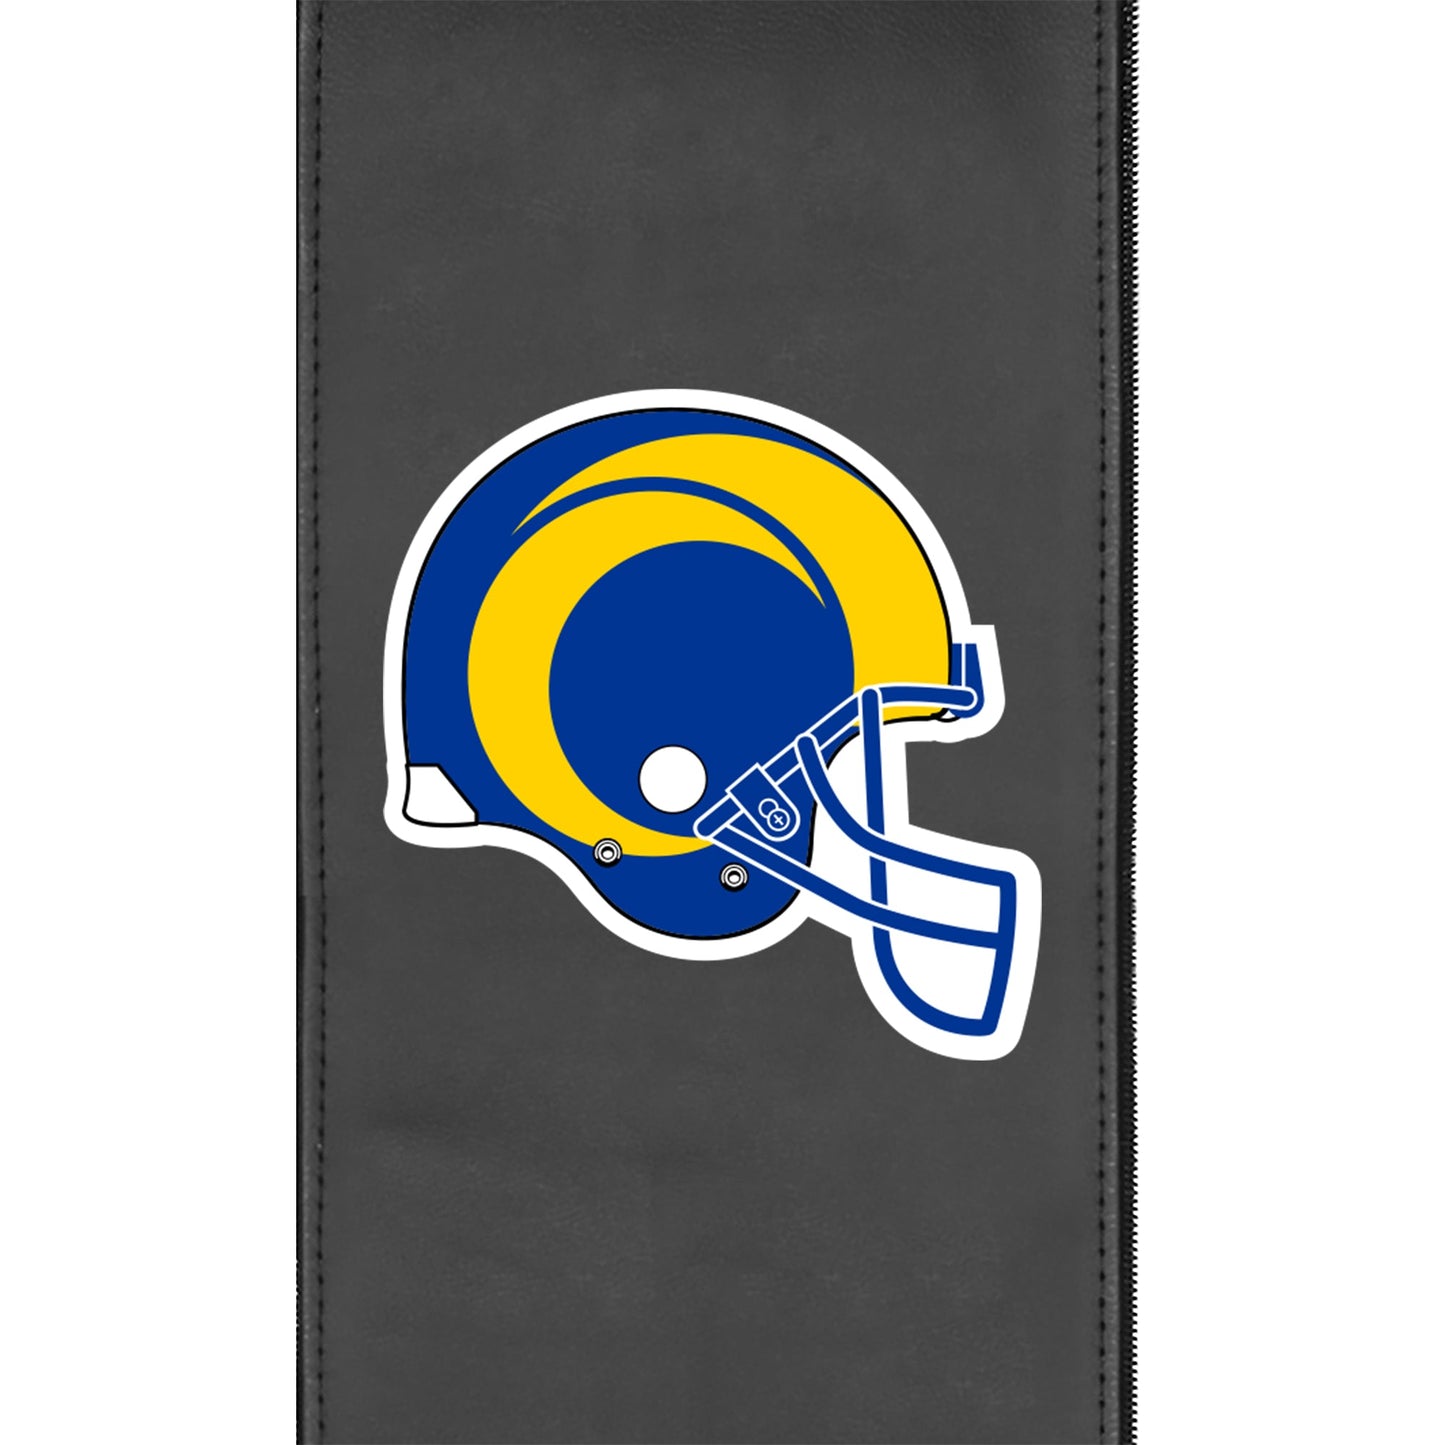 Silver Club Chair with  Los Angeles Rams Helmet Logo